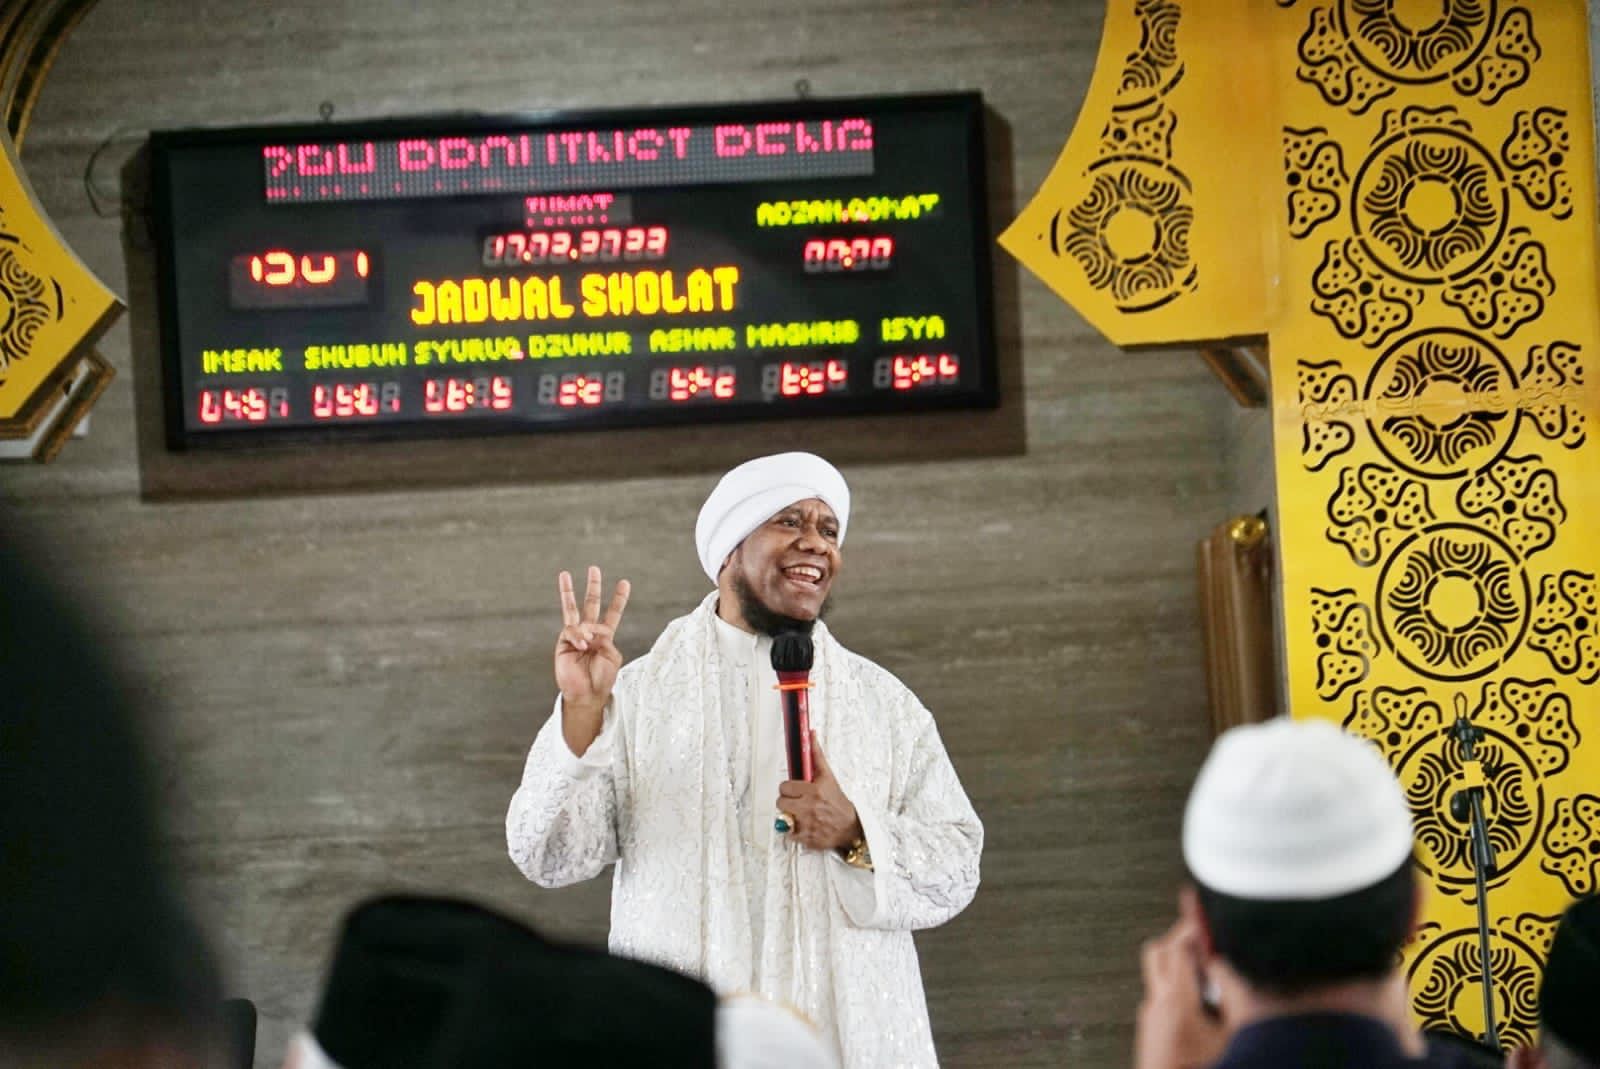 Peringati Isra Miraj di Bengkulu, Ini Kata Ustadz Fadlan Garamatan